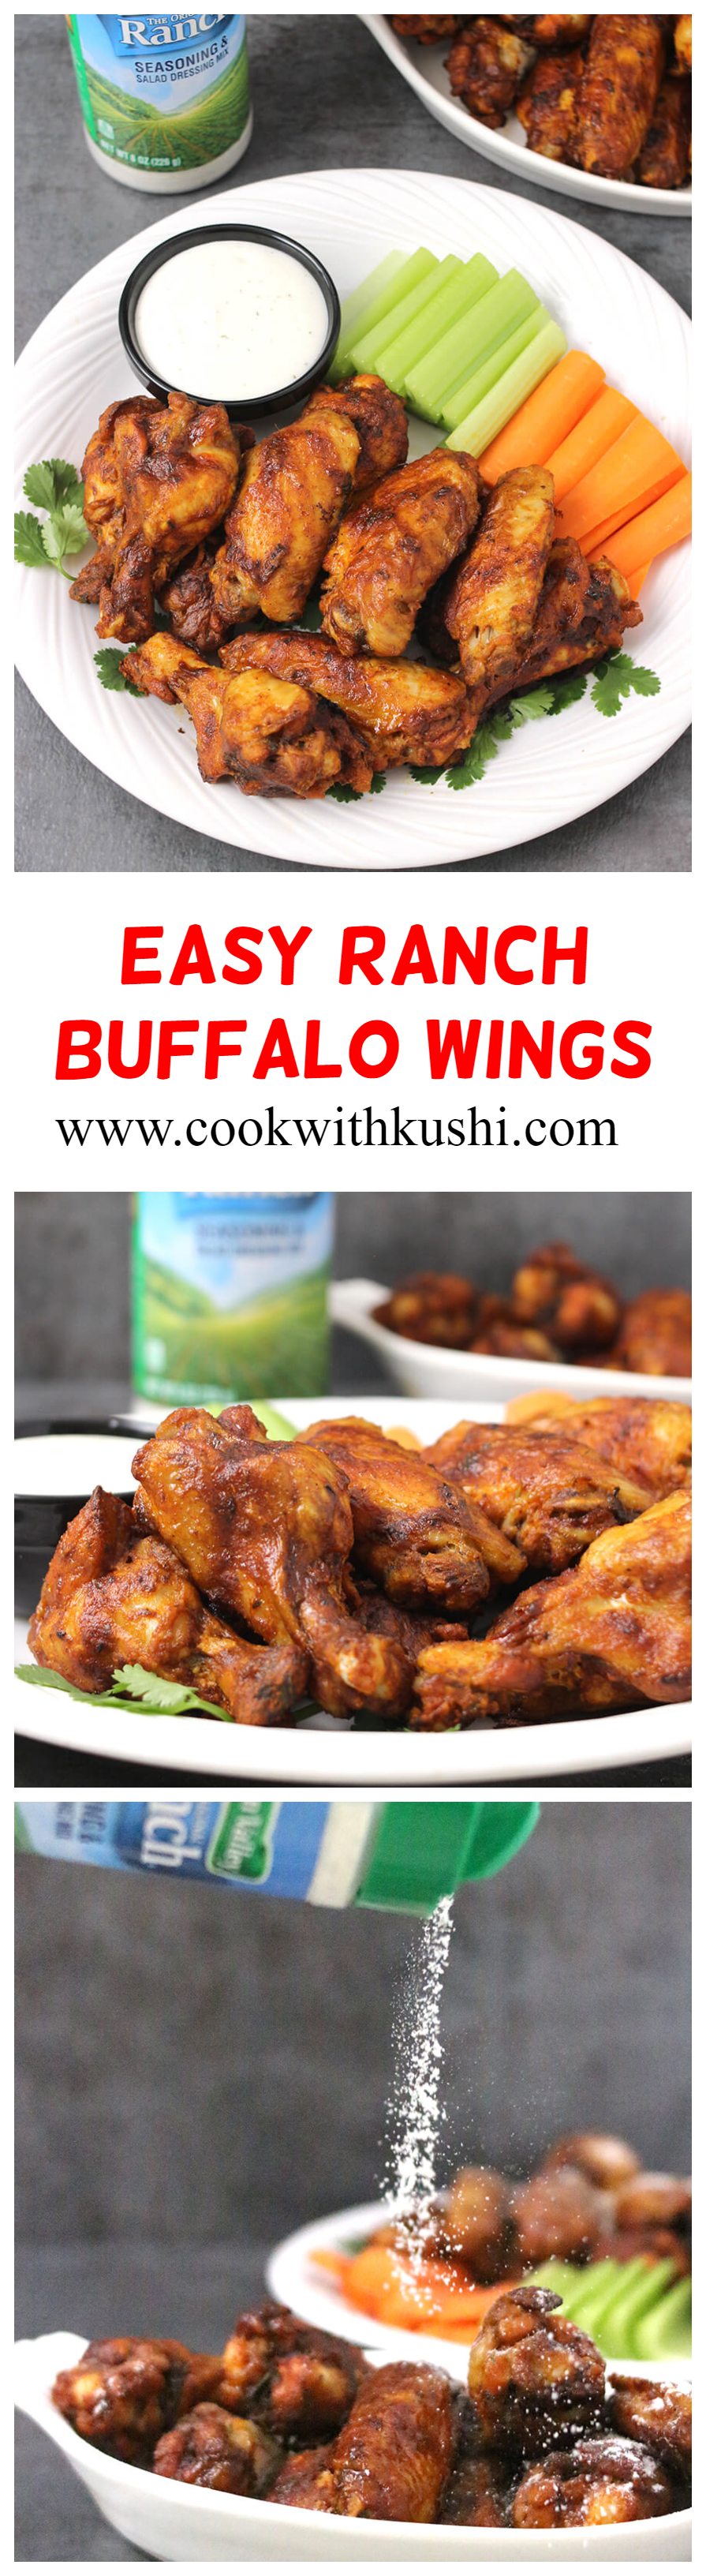 Easy Ranch Buffalo wings / Chicken Recipes / Spicy Food Recipes / SUmmer Recipes / Hot WIngs / Buffalo WIld Wings / Healthy Chicken Recipes / Best chicken recipes / HVRLOVE / Gluten Free chicken Recipes 